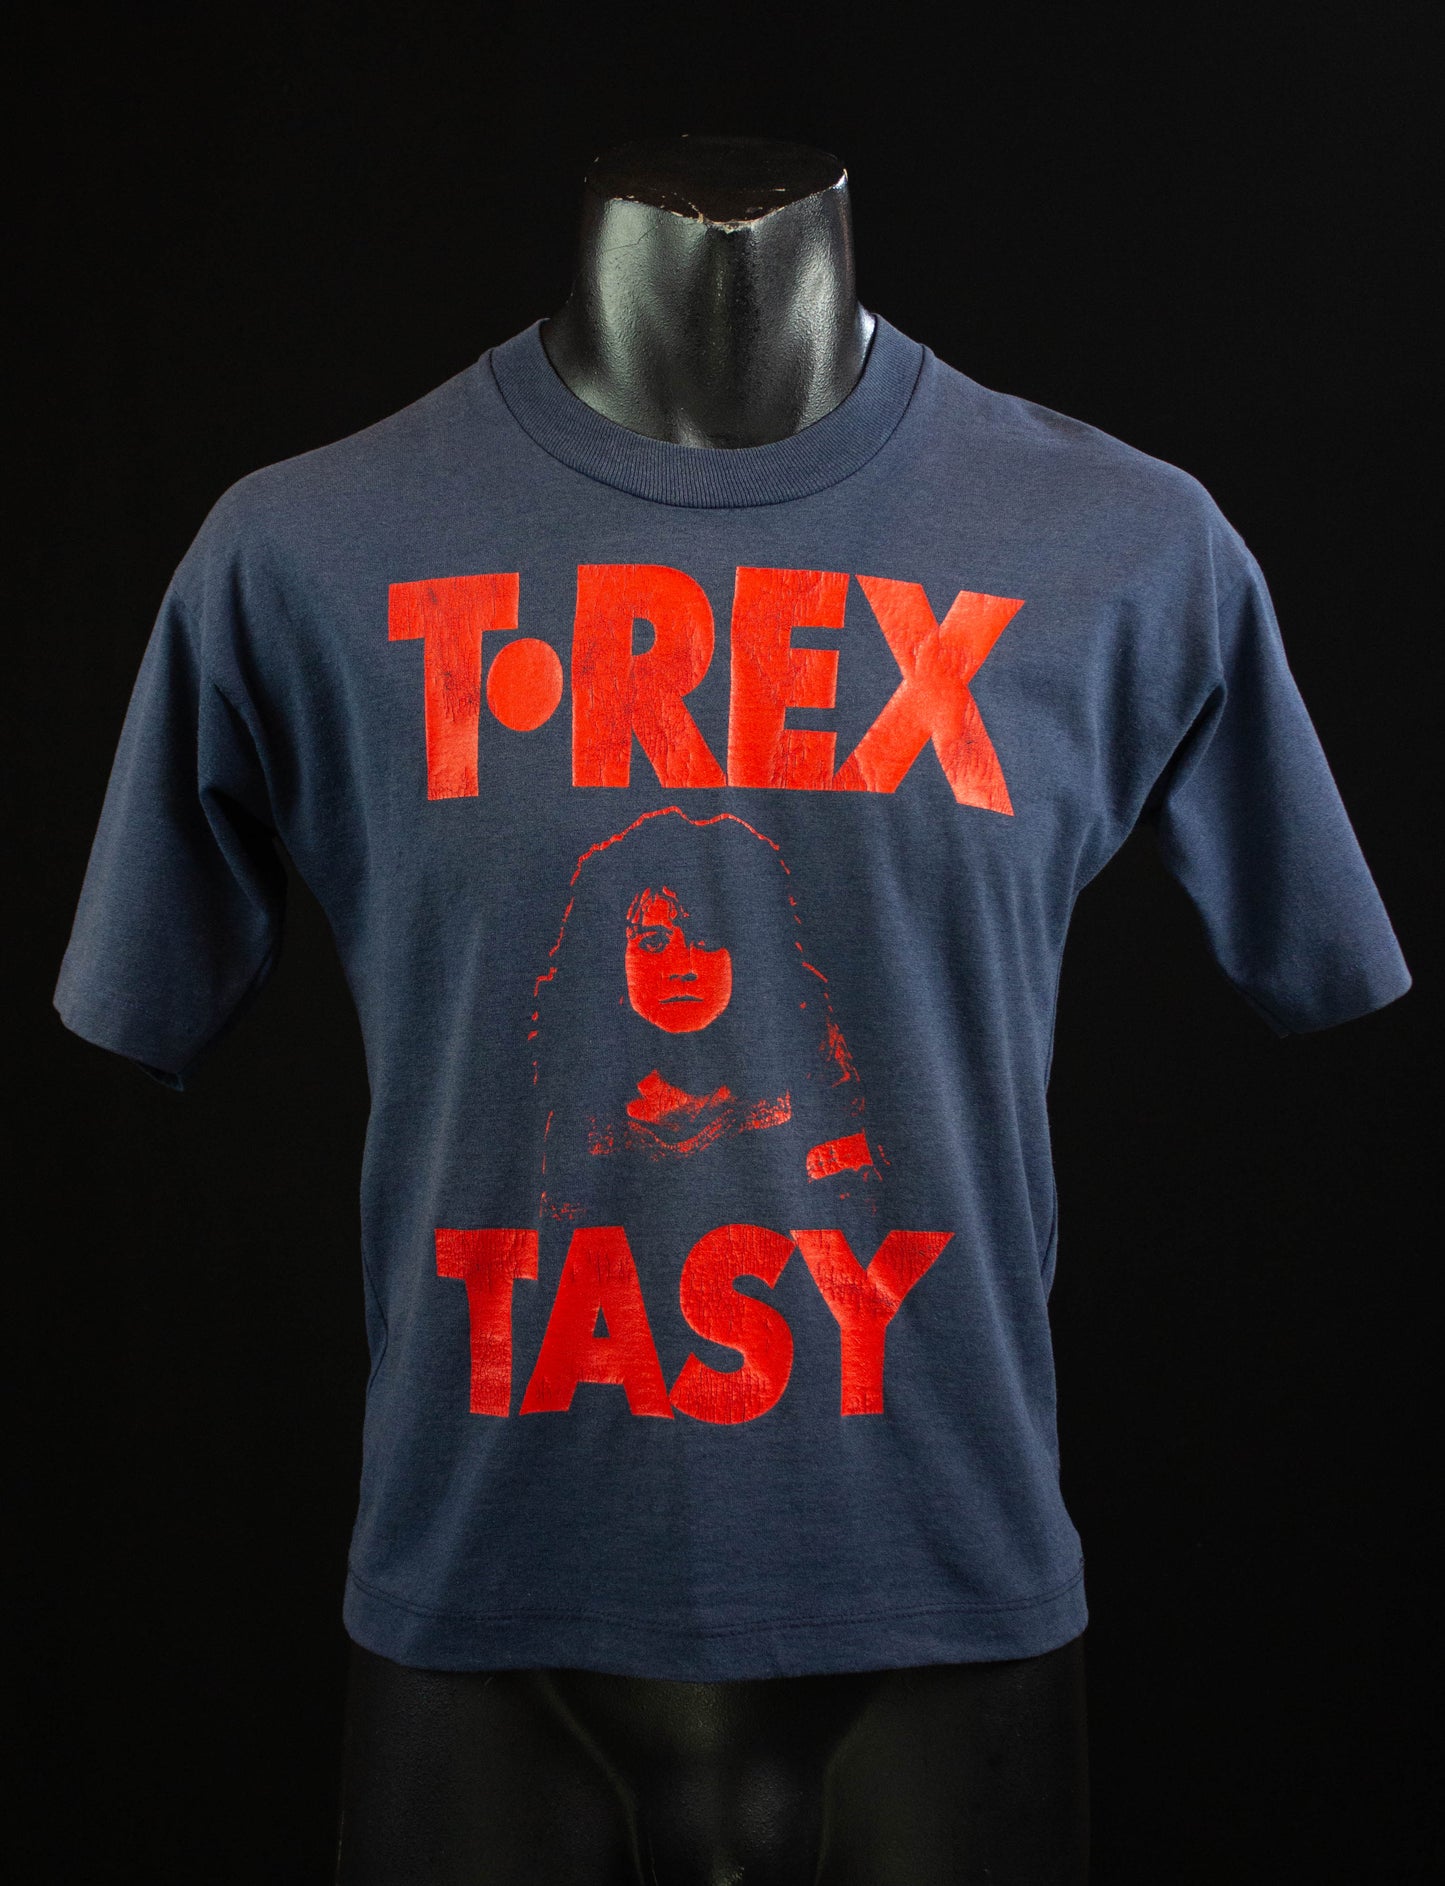 Vintage T. Rexstasy Concert T Shirt 90s UK Tour Navy Blue and Red Medium